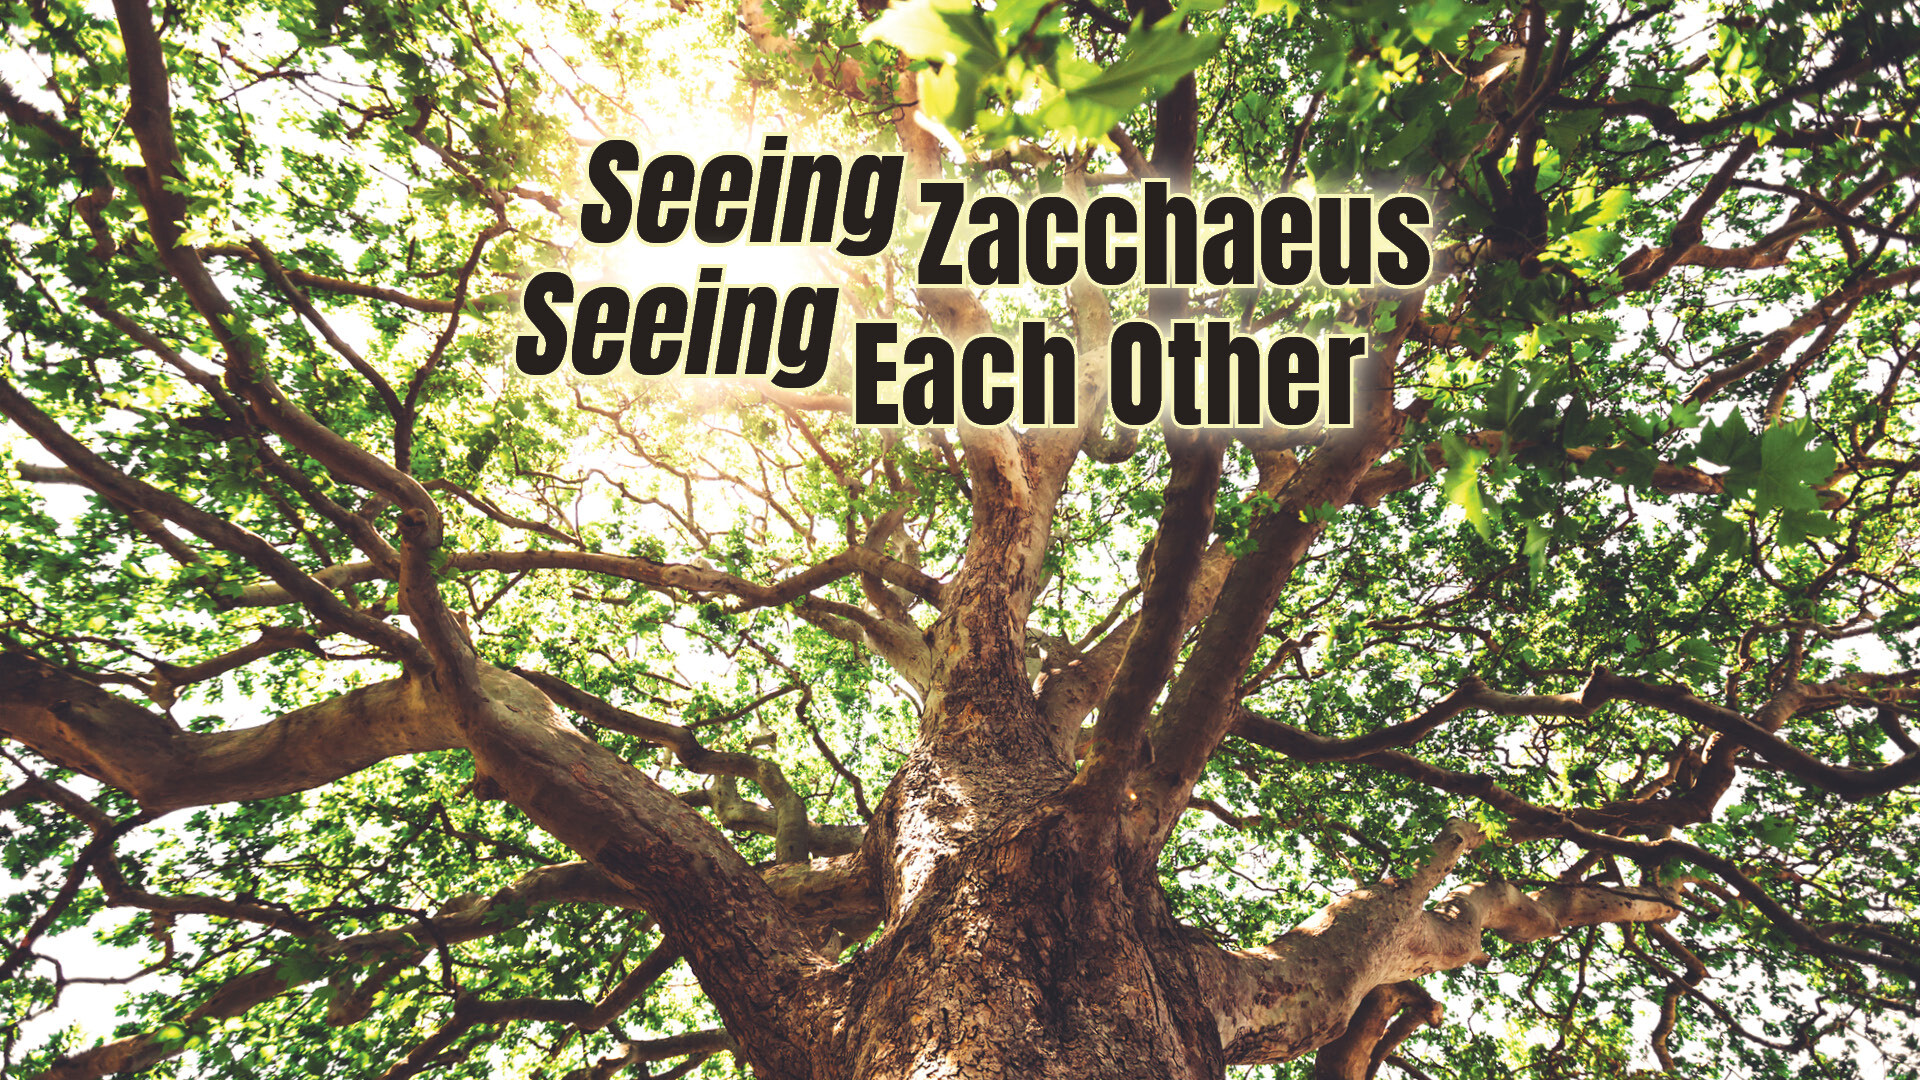 Seeing Zaccheaus, Seeing Each Other